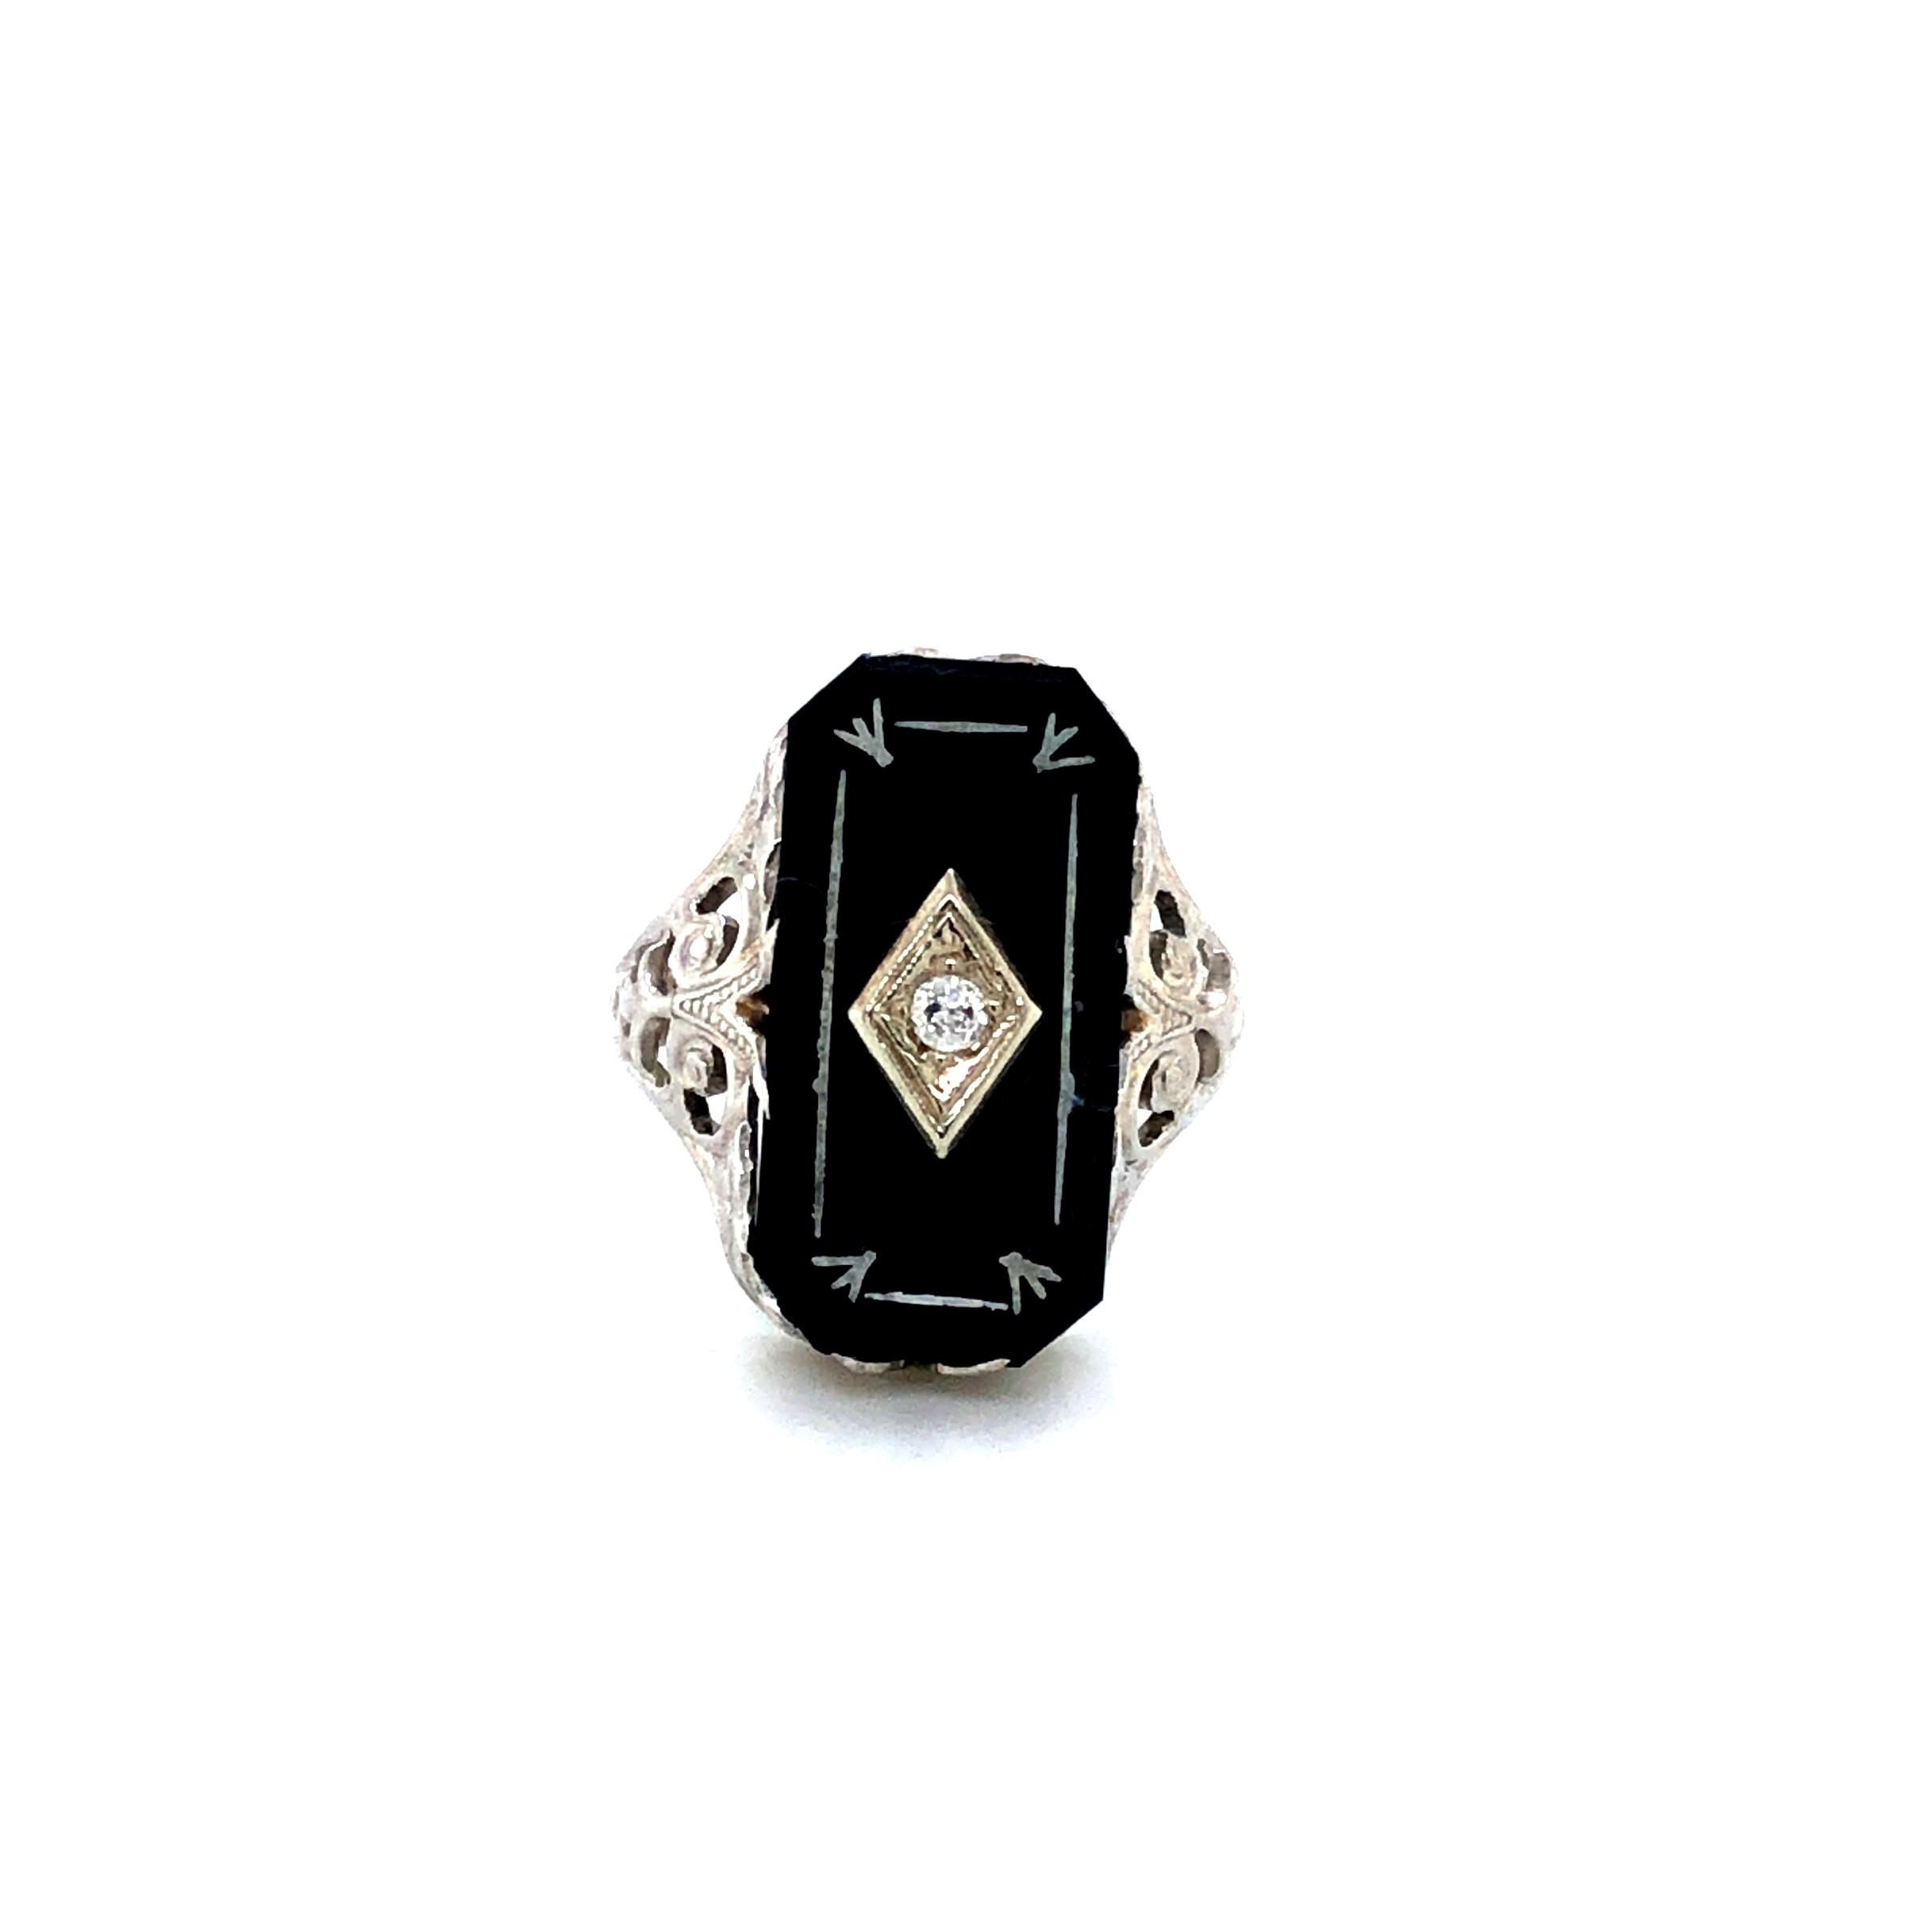 Lady s White 14 Karat Estate Ring With One 0.04CT Old European Cut Diamond set on a Black Onyx Plate.